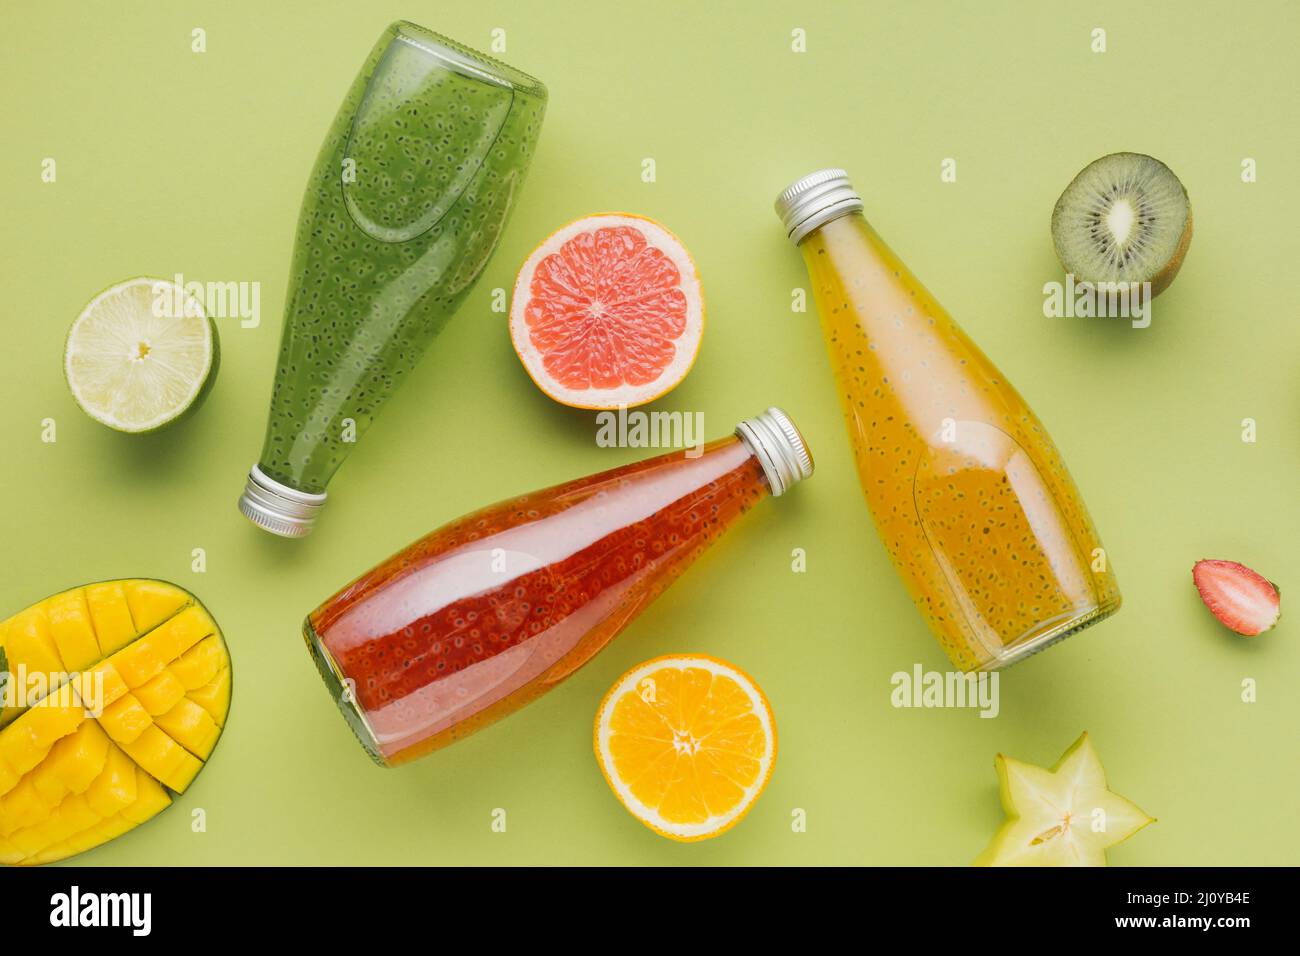 Bottiglie di succo colorate fette di frutta. Foto di alta qualità Foto Stock